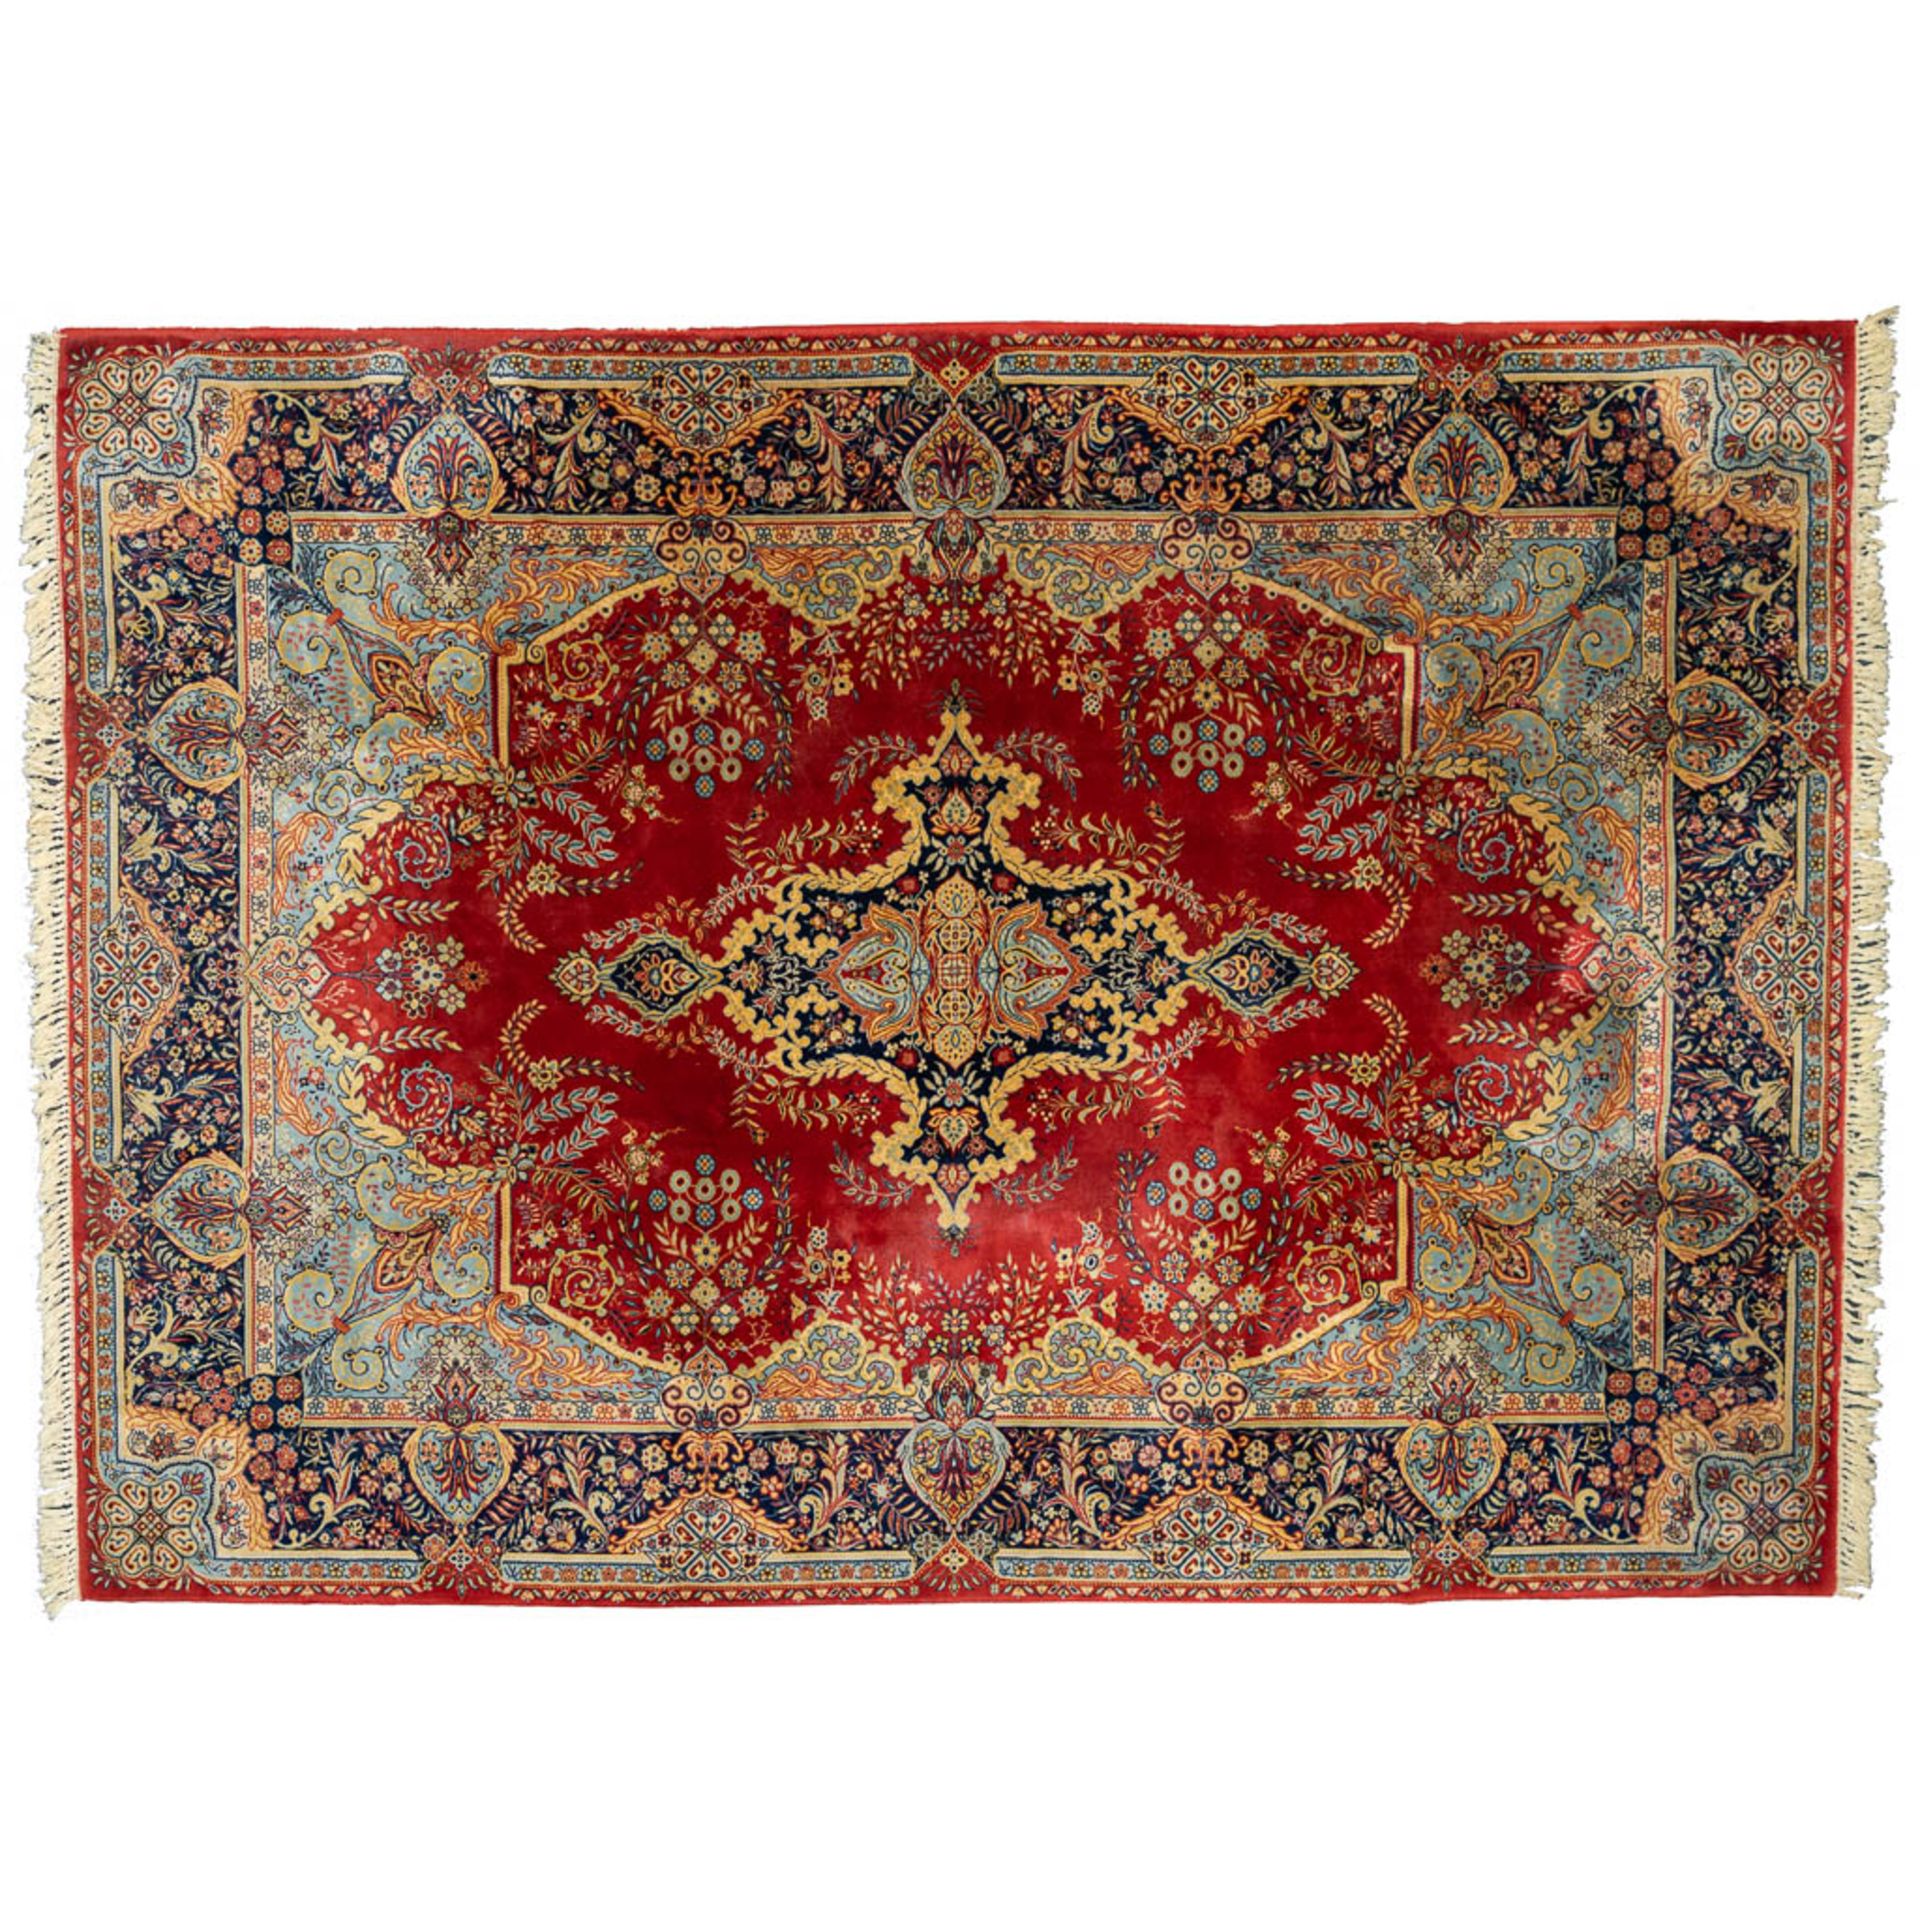 An Oriental carpet 342 x 244